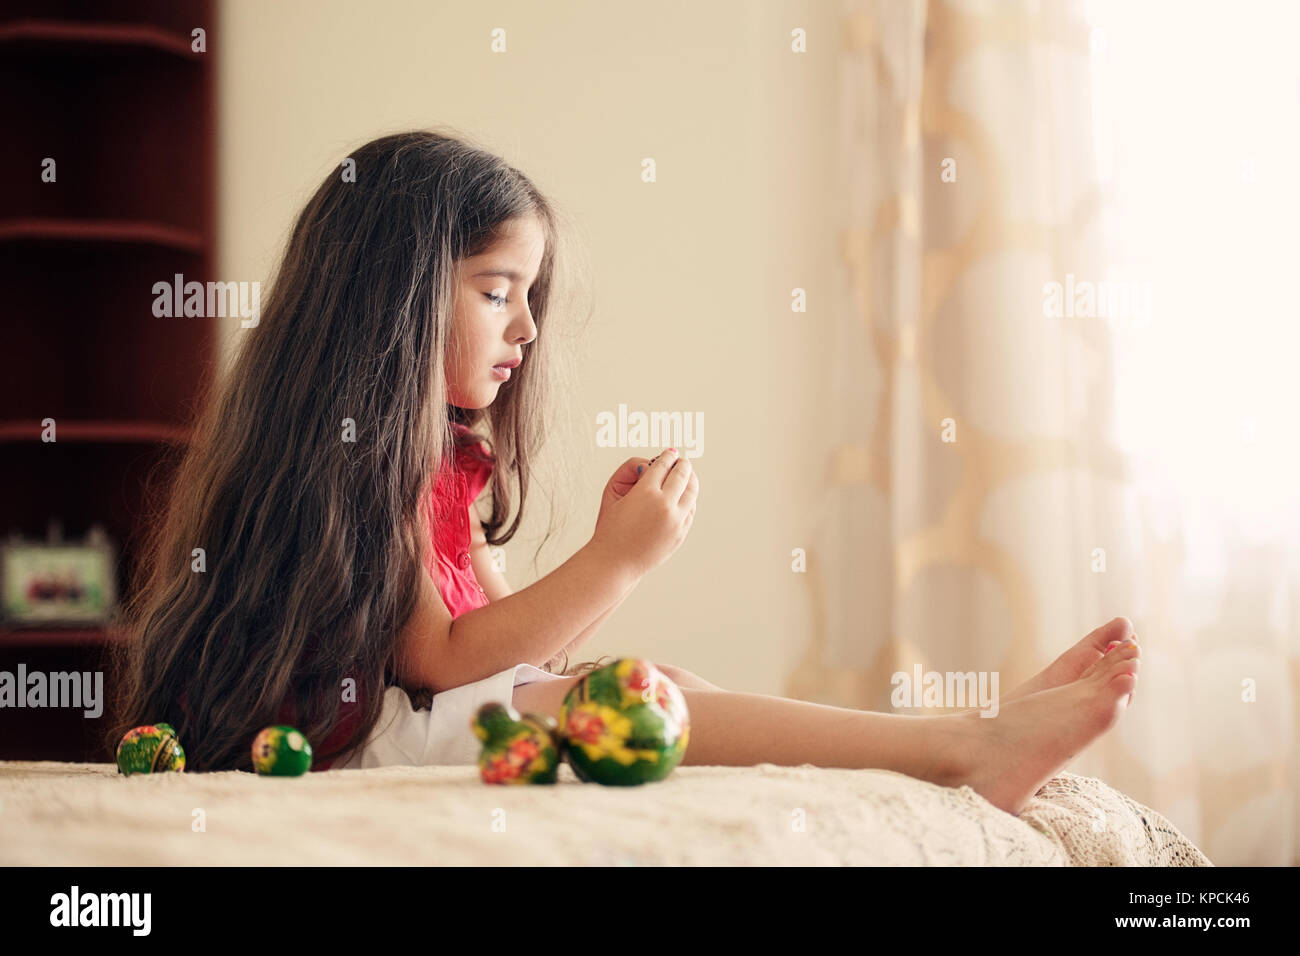 Girl playing with matryoshka dolls Stock Photo